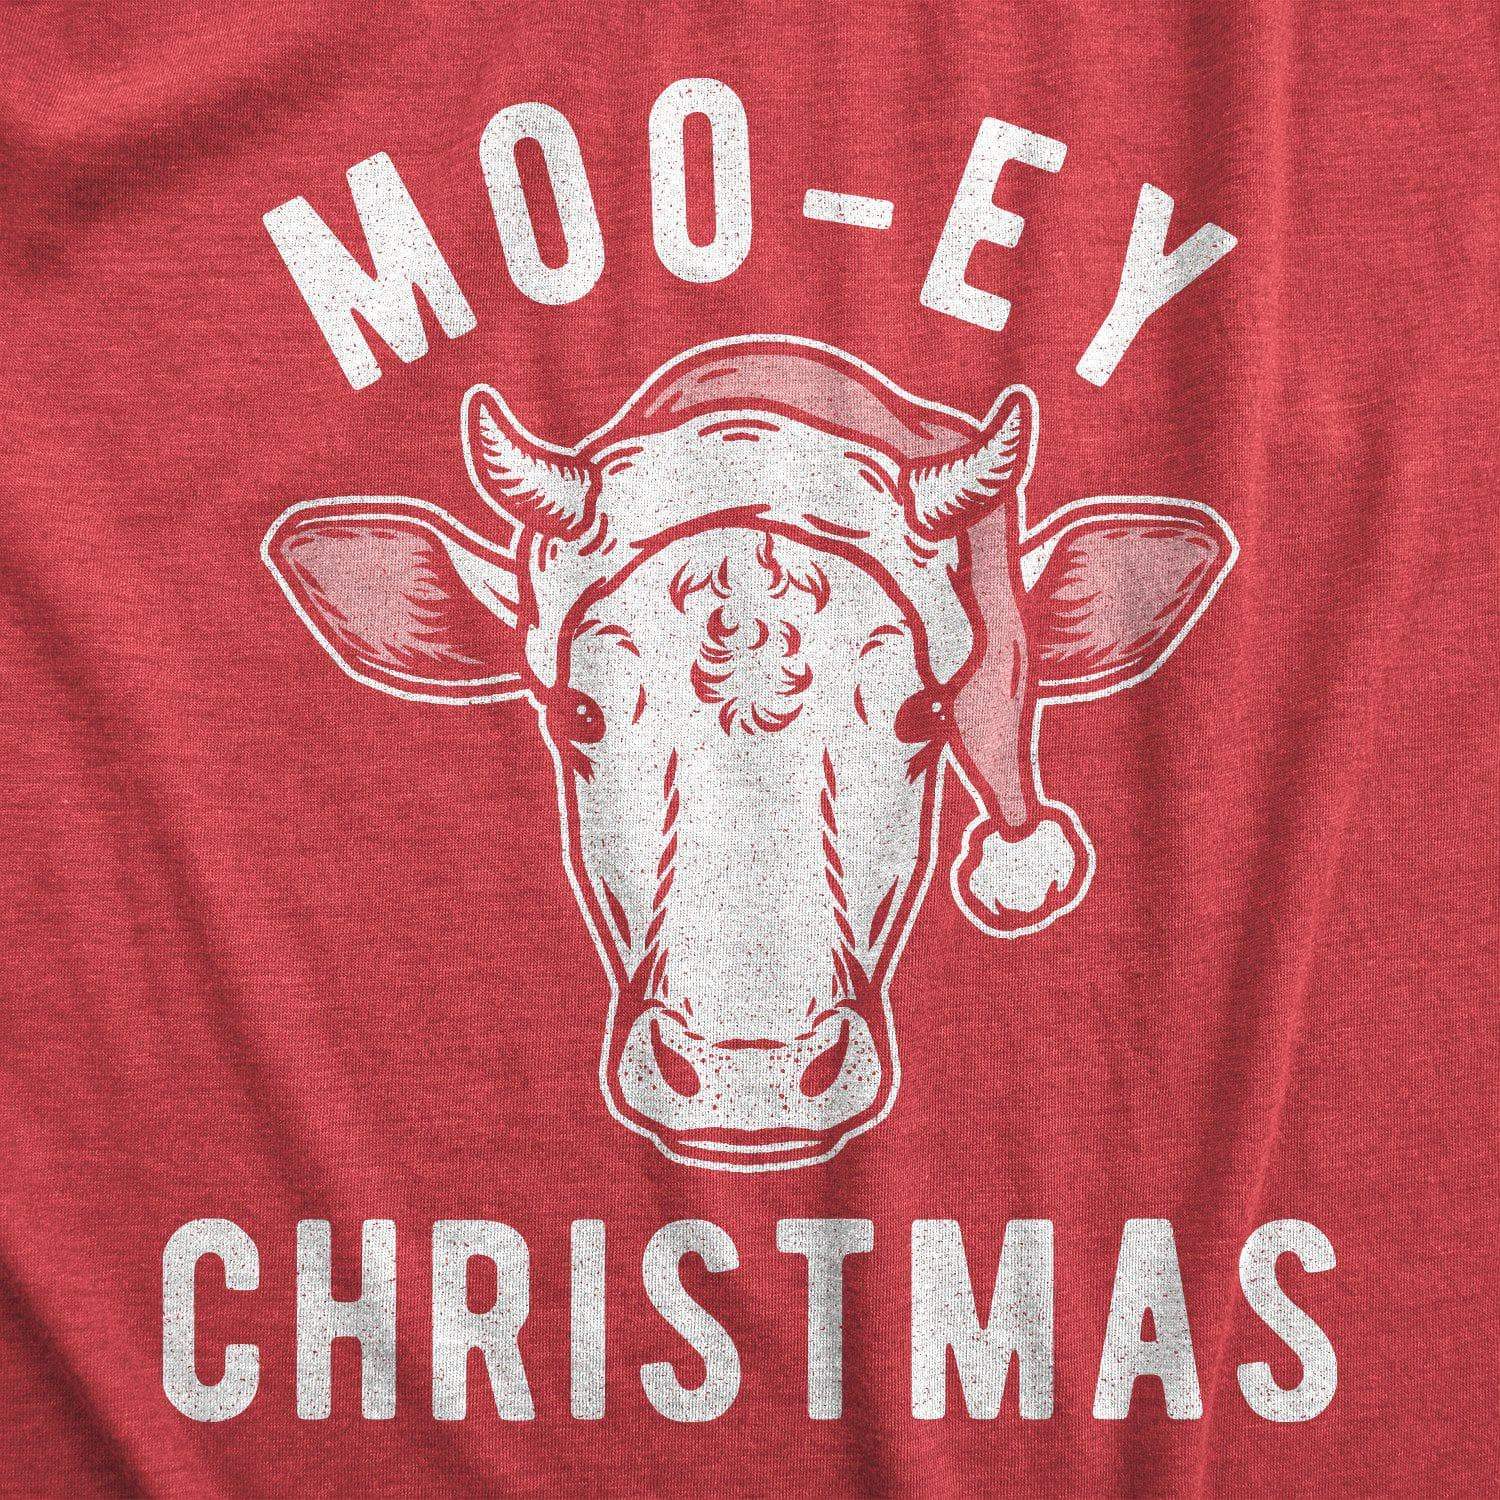 Moo-ey Christmas Men's Tshirt - Crazy Dog T-Shirts